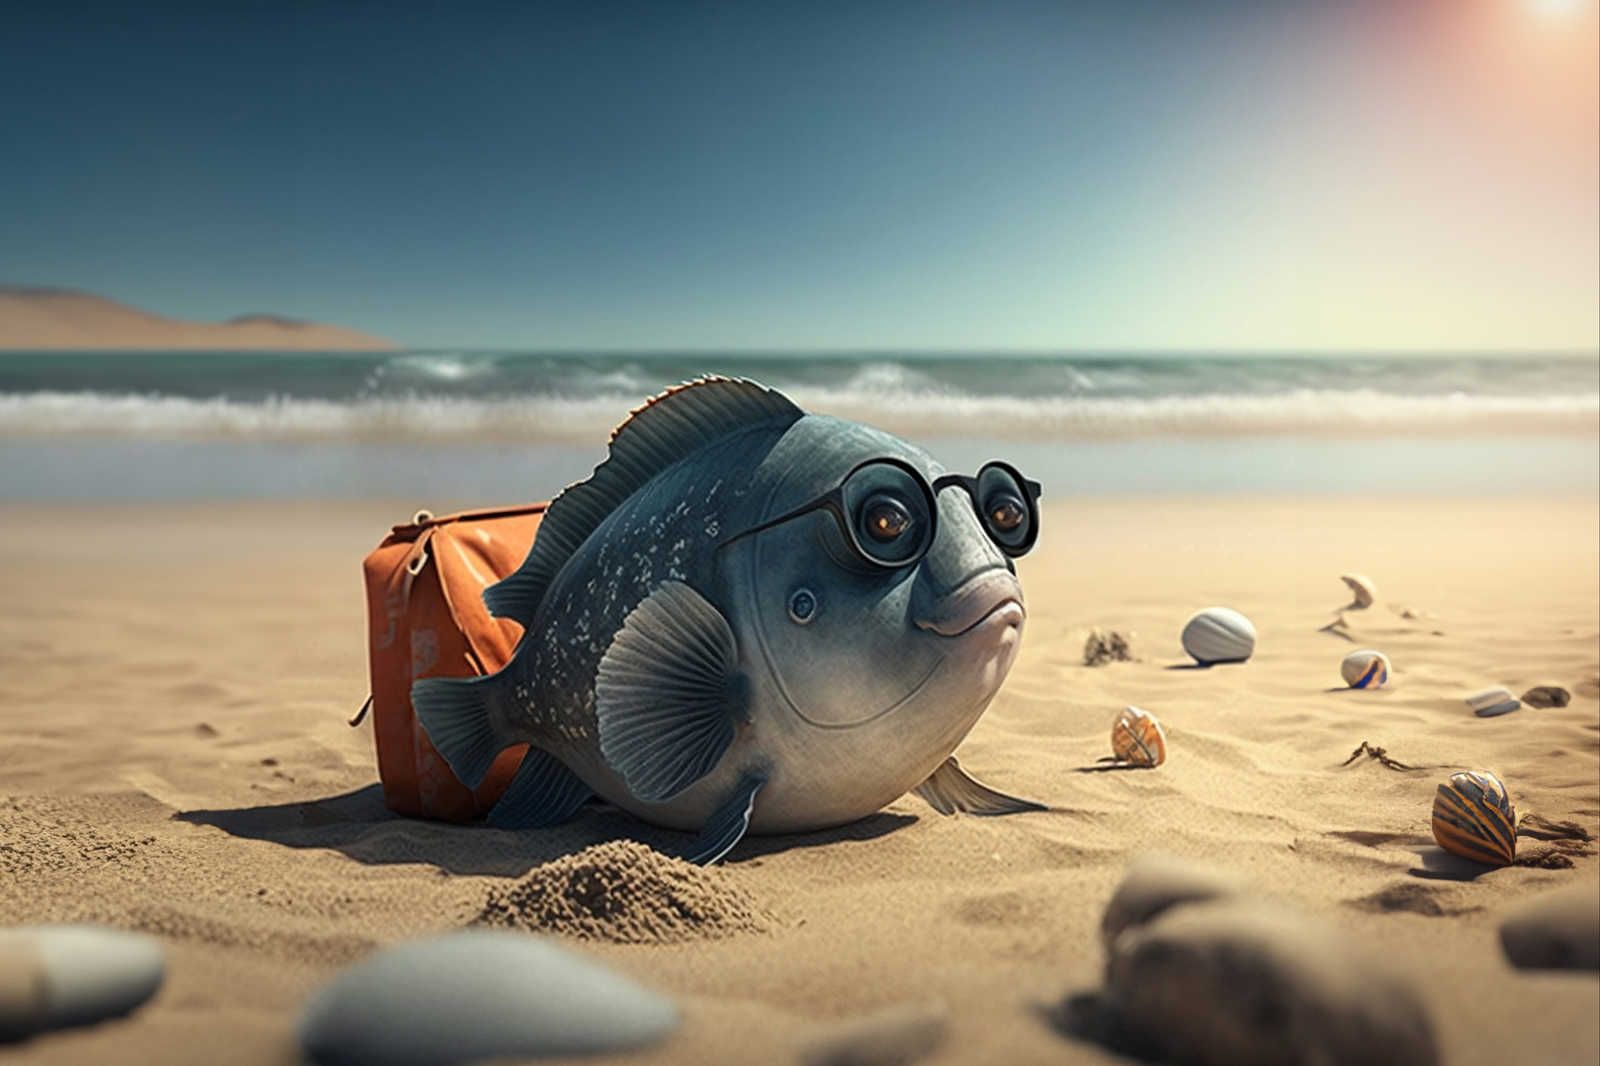             Toile KI »Fishy Beachday« - 120 cm x 80 cm
        